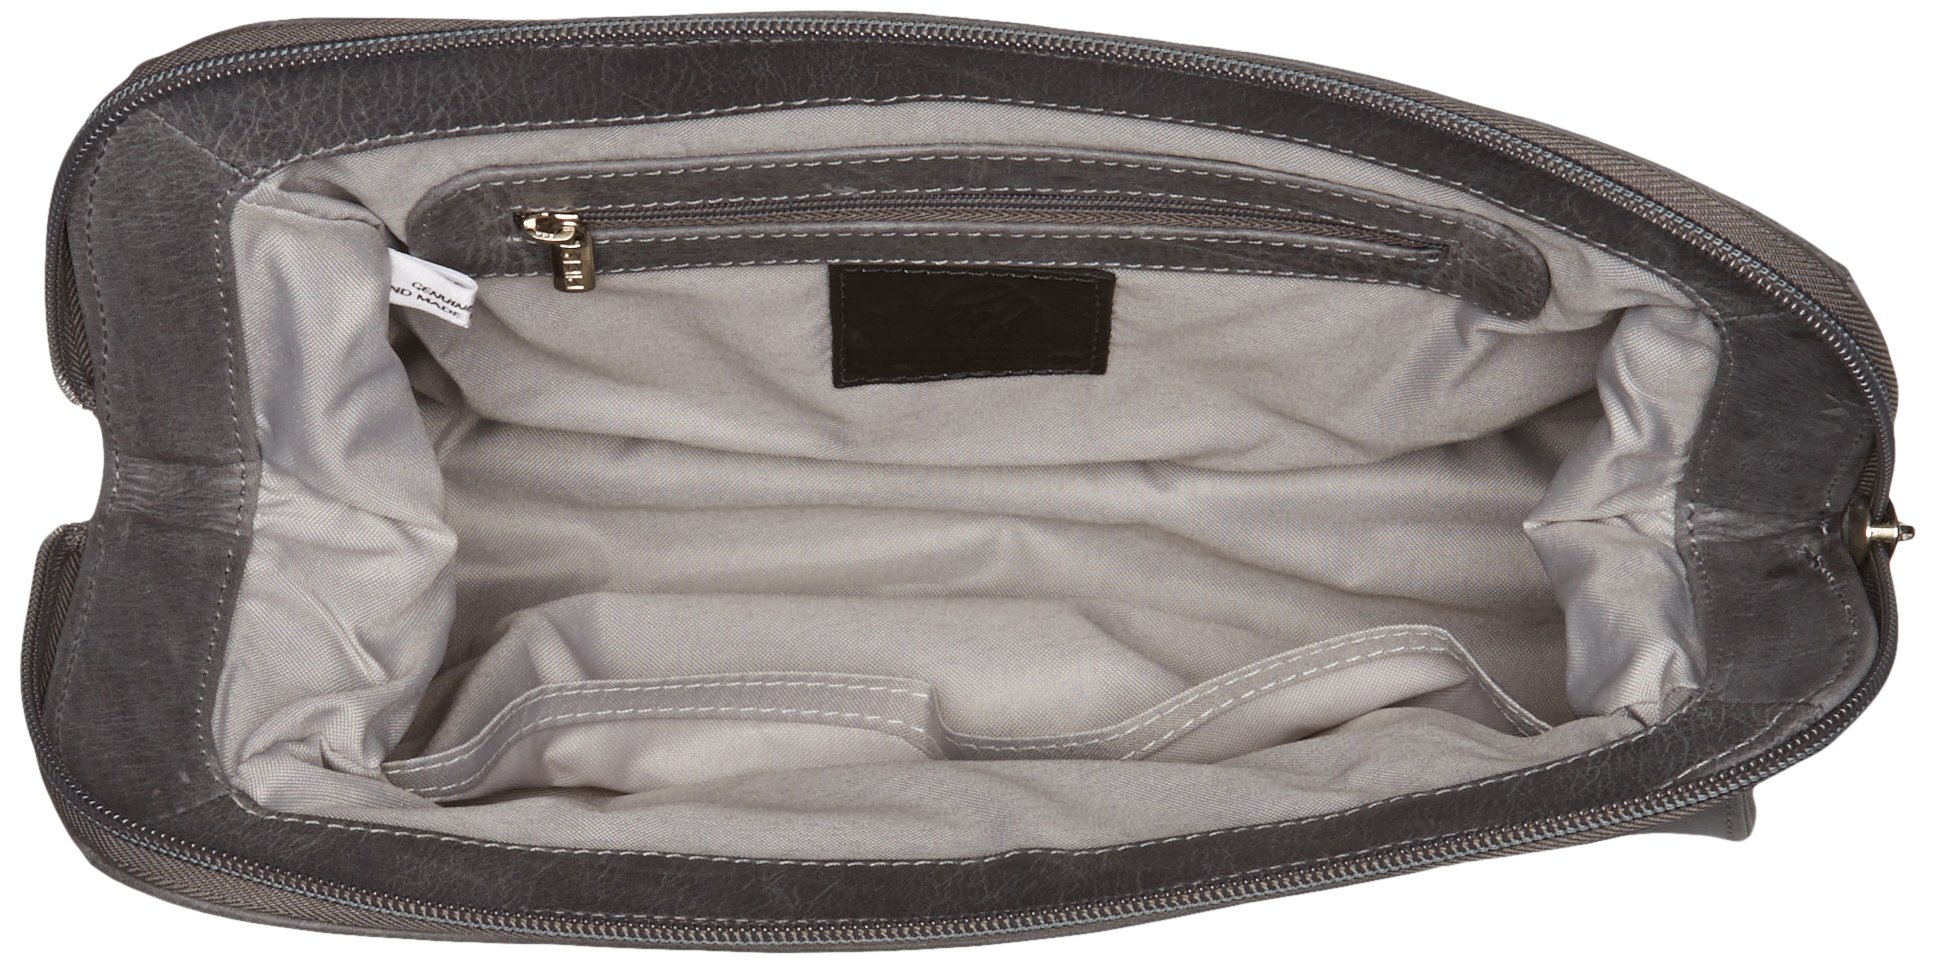 Piel Leather Convertible Handbag/Clutch/Shoulder Bag, Charcoal, One Size